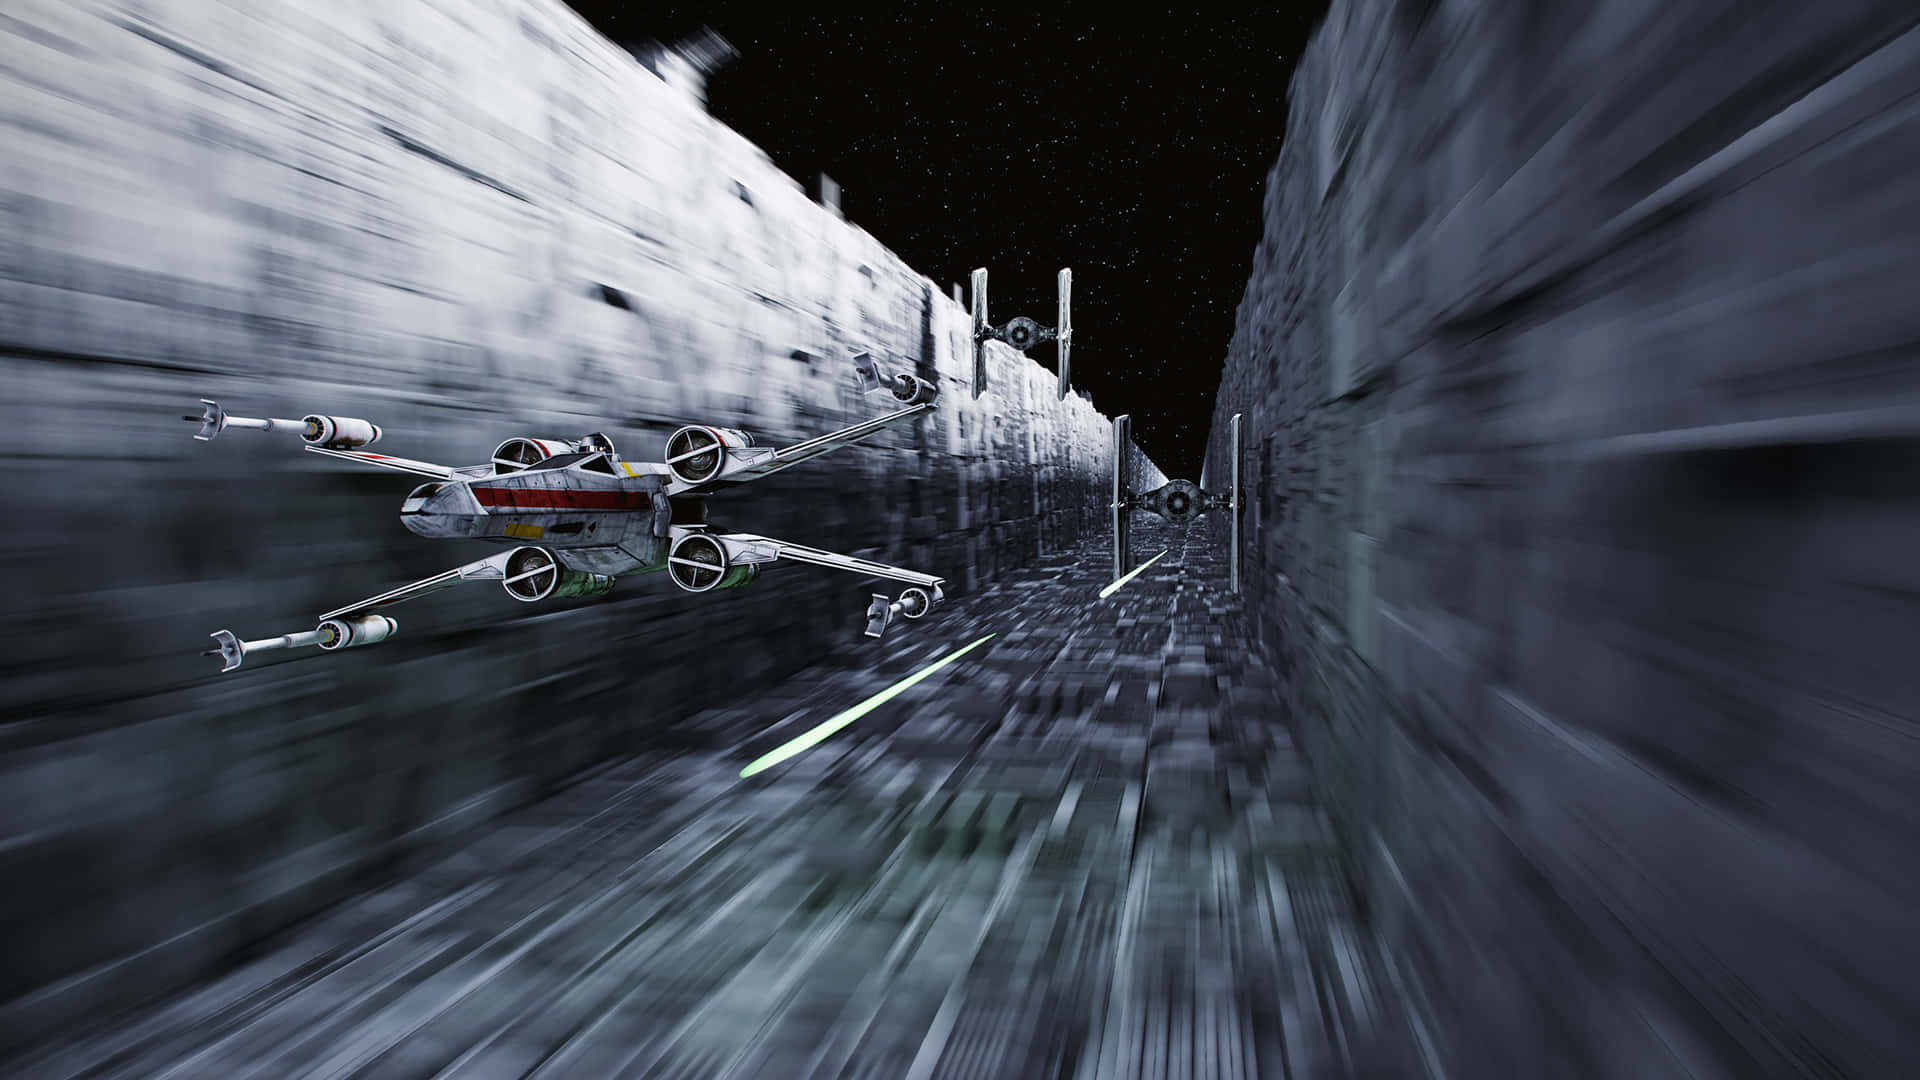 Luke Skywalker wields his laser sword to take down the Death Star during the Battle of Yavin. Wallpaper